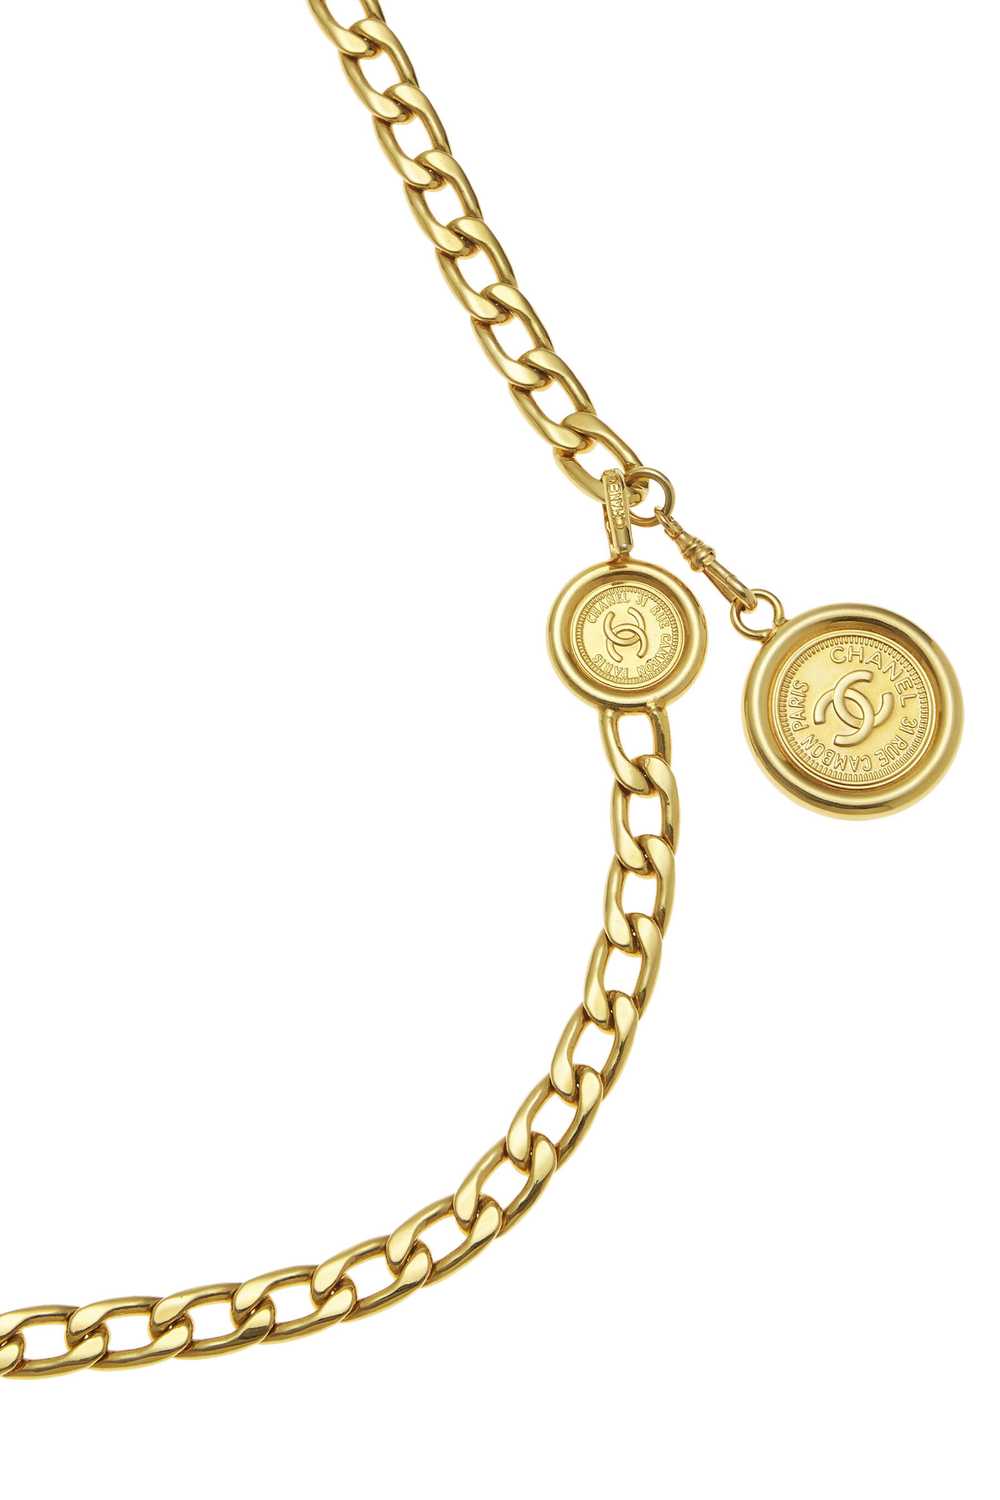 Gold 'CC' Medallion Chain Belt - image 2